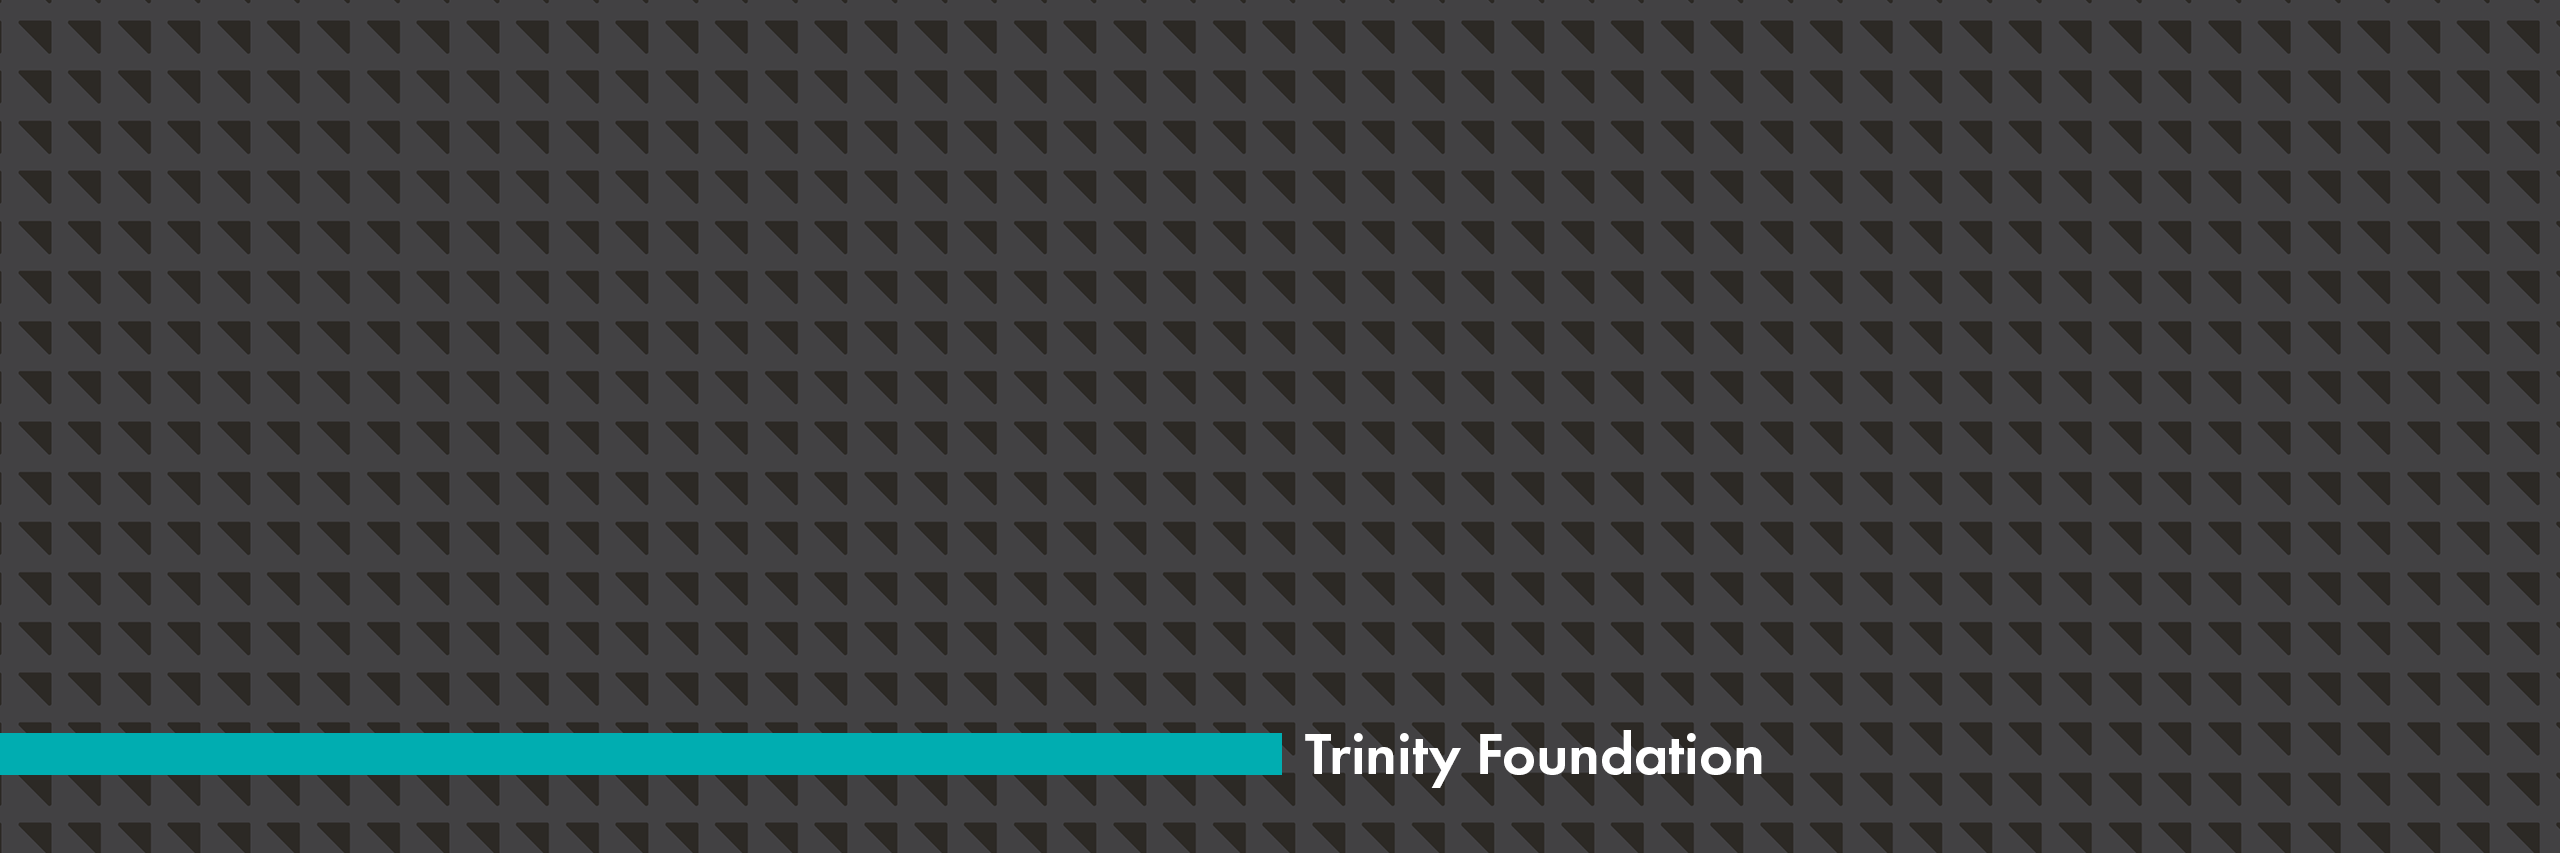 Golf Tournament an ace for the Trinity Foundation, $12,000 raised